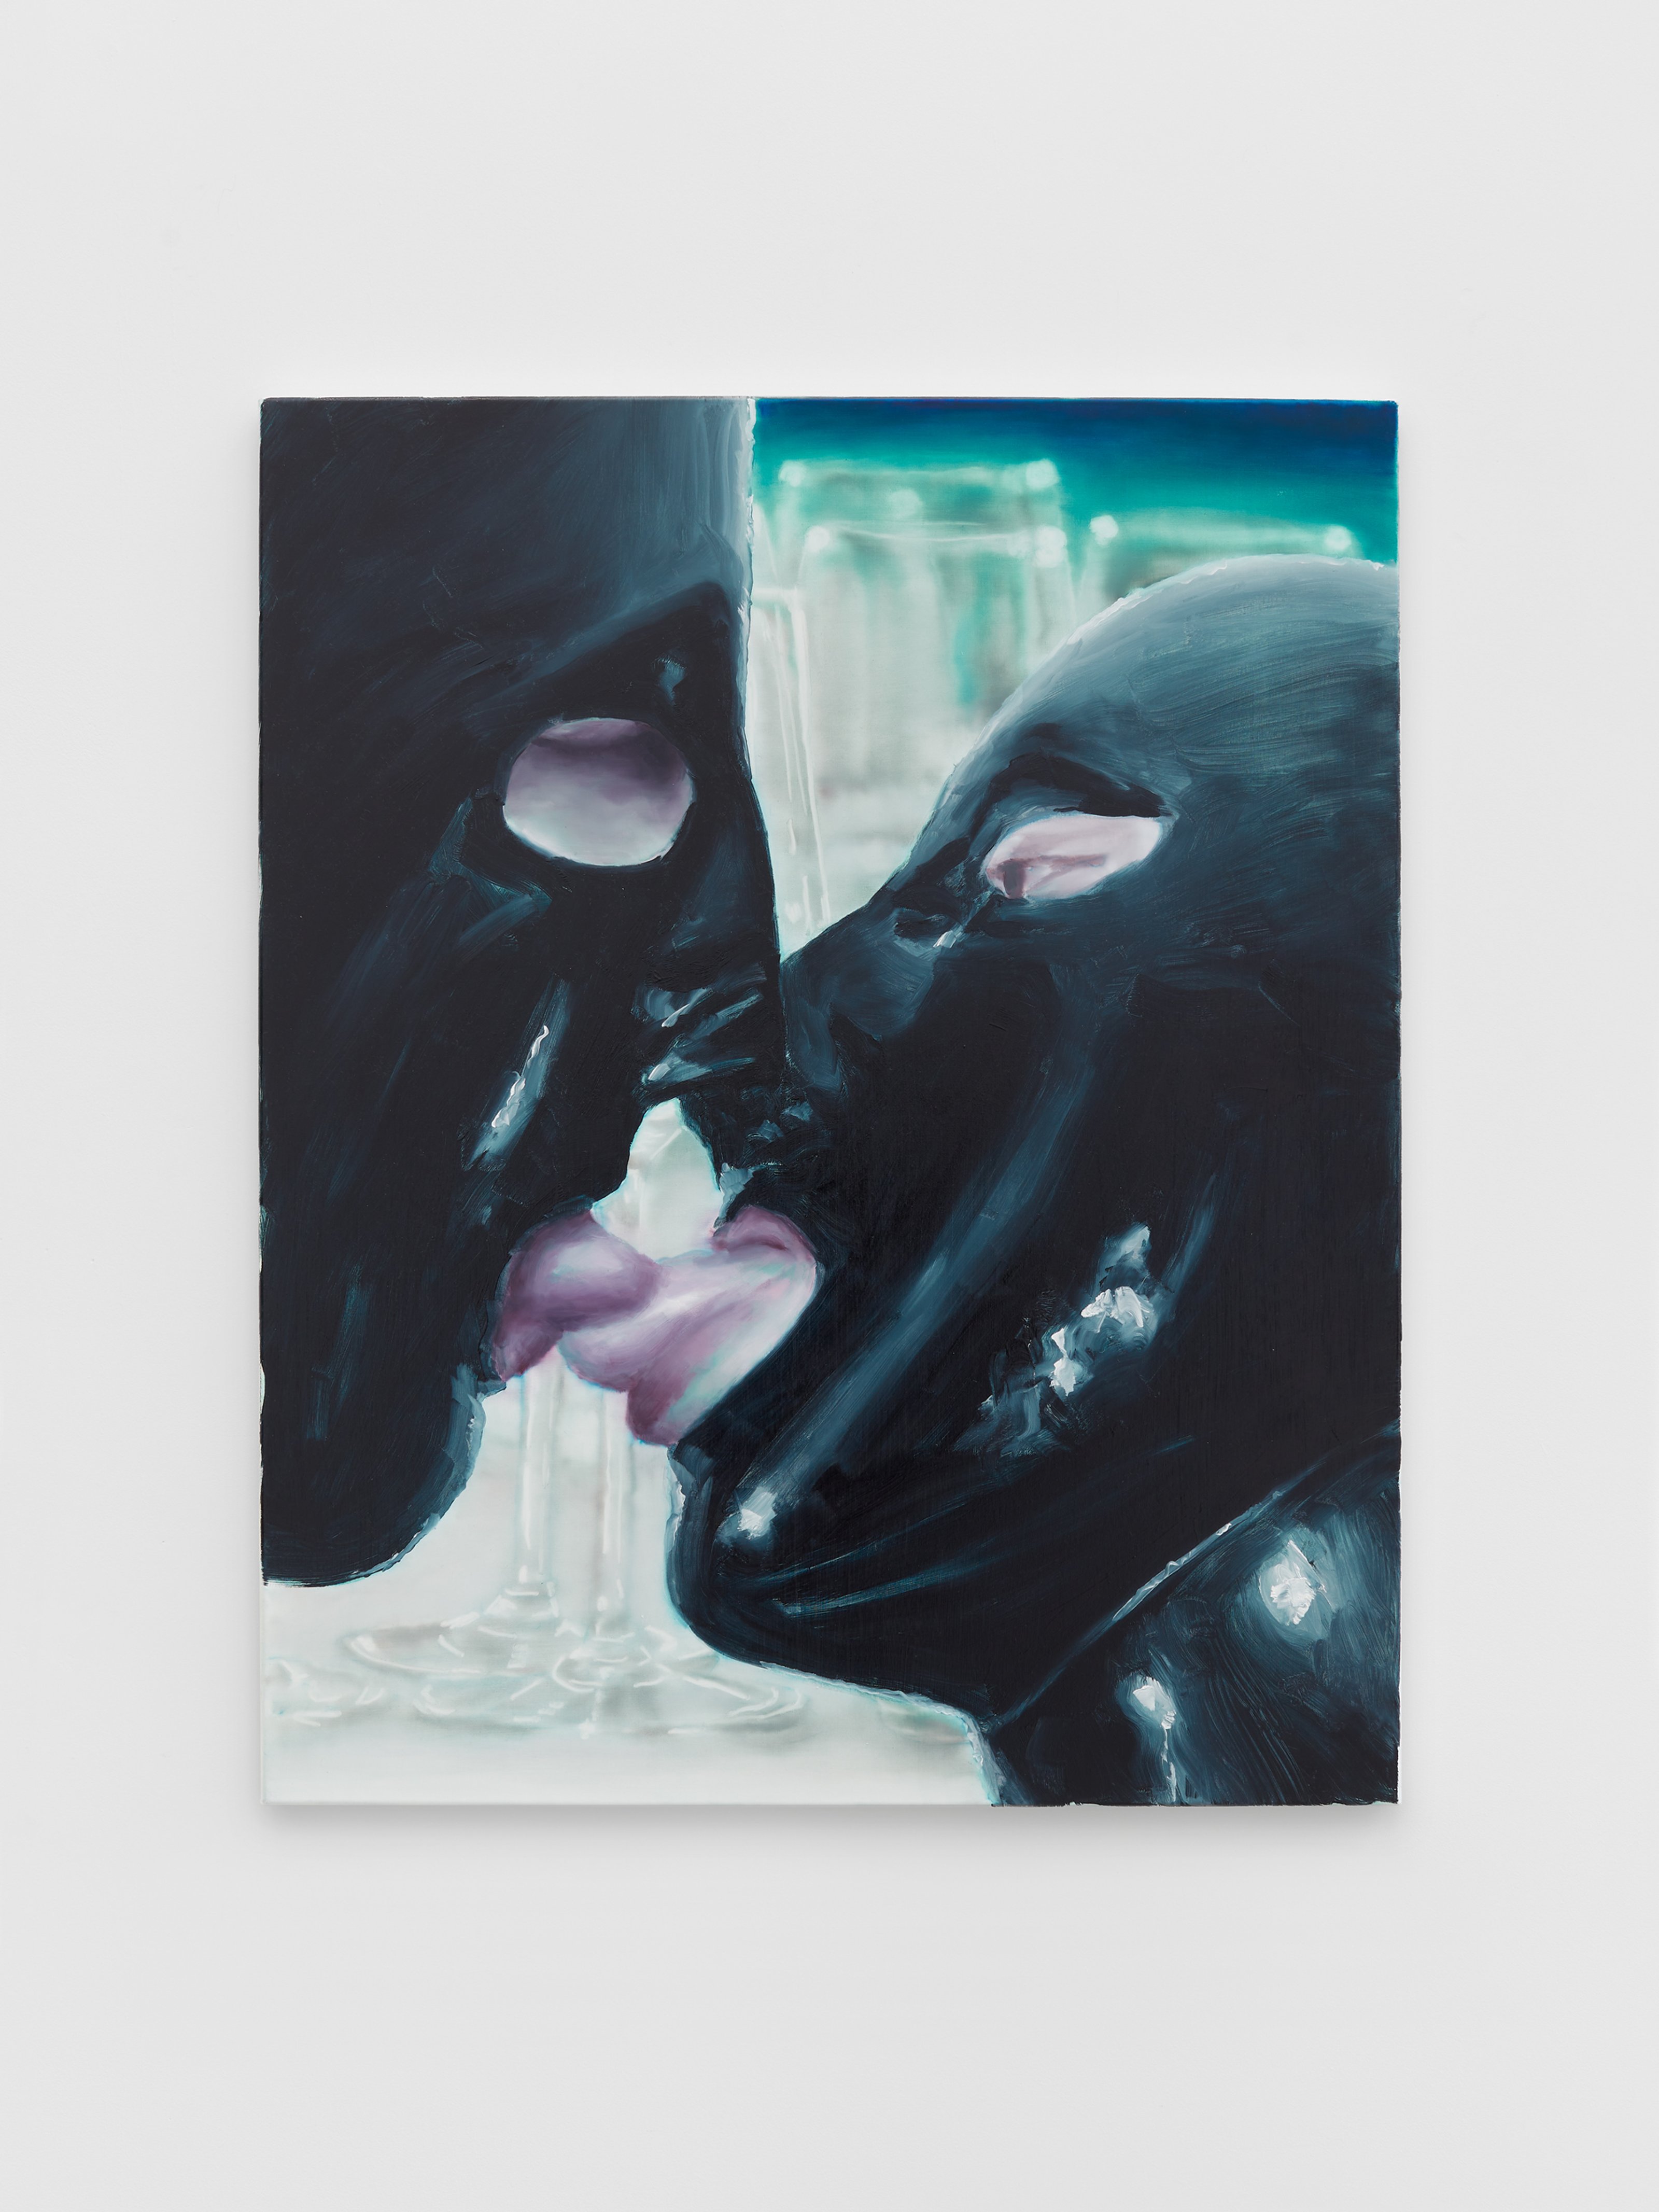 Two figures in gimp masks kissing.